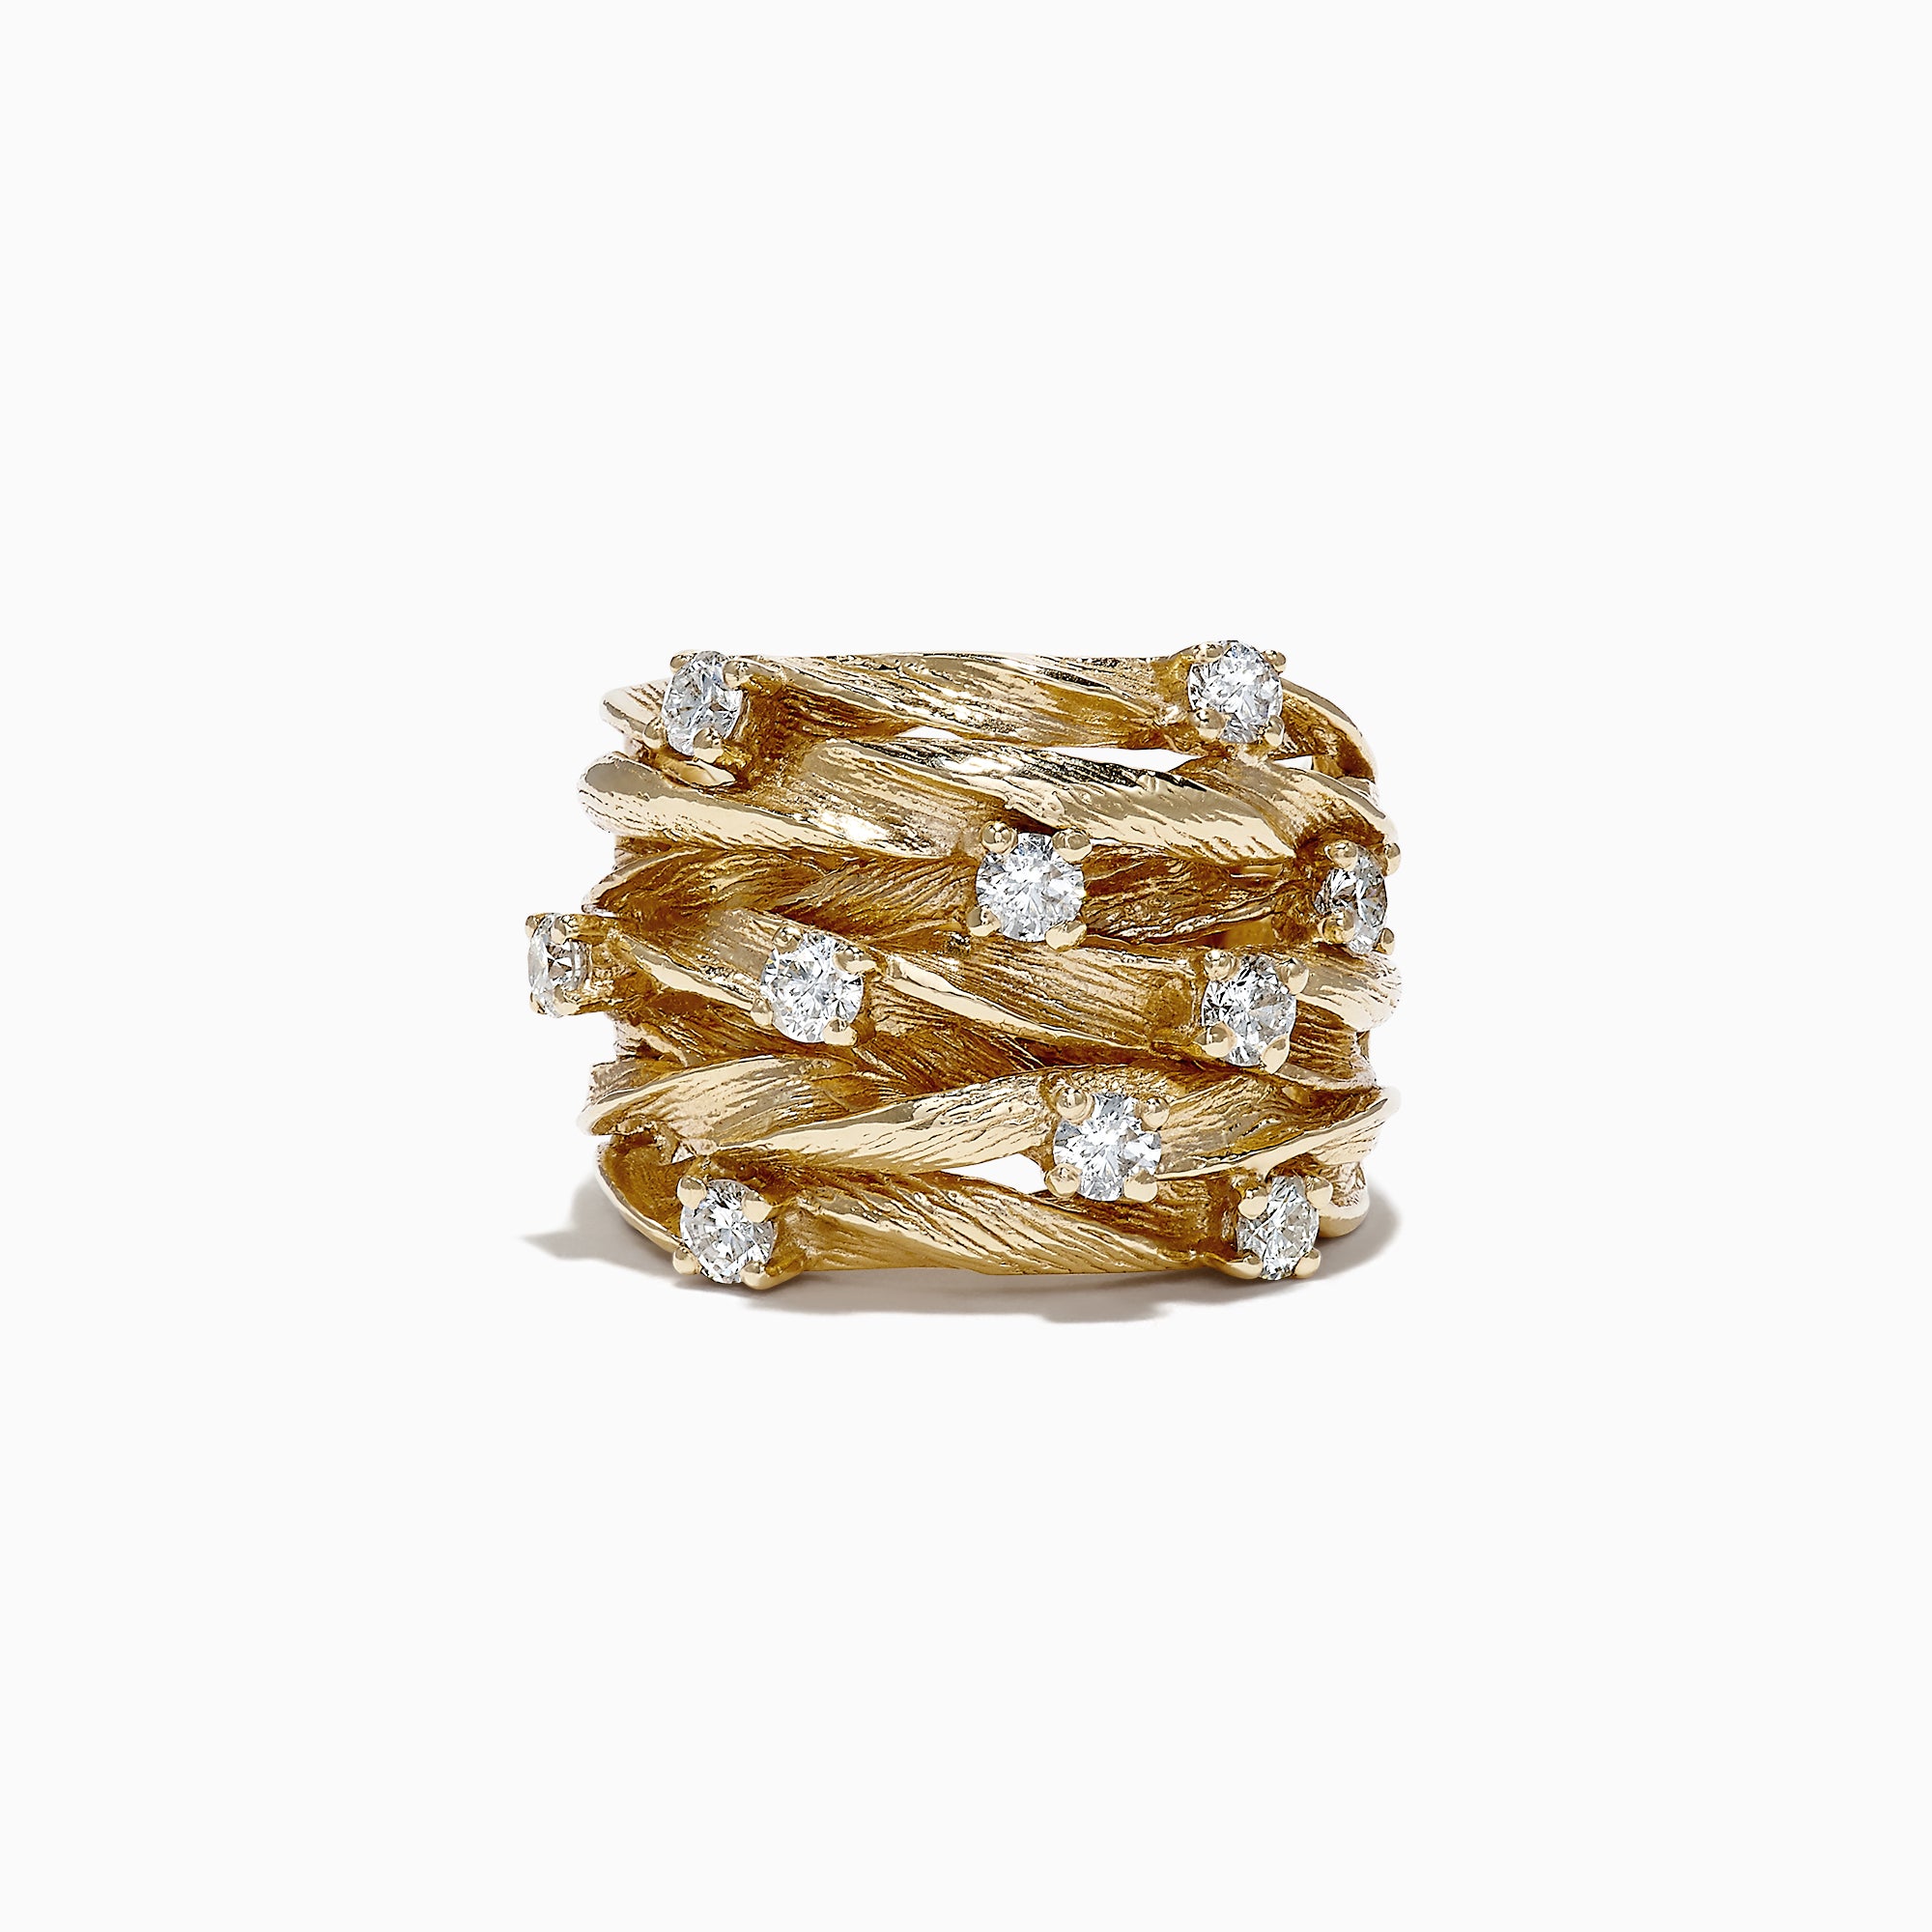 Effy D'Oro 14K Yellow Gold Diamond Ring, 0.98 TCW